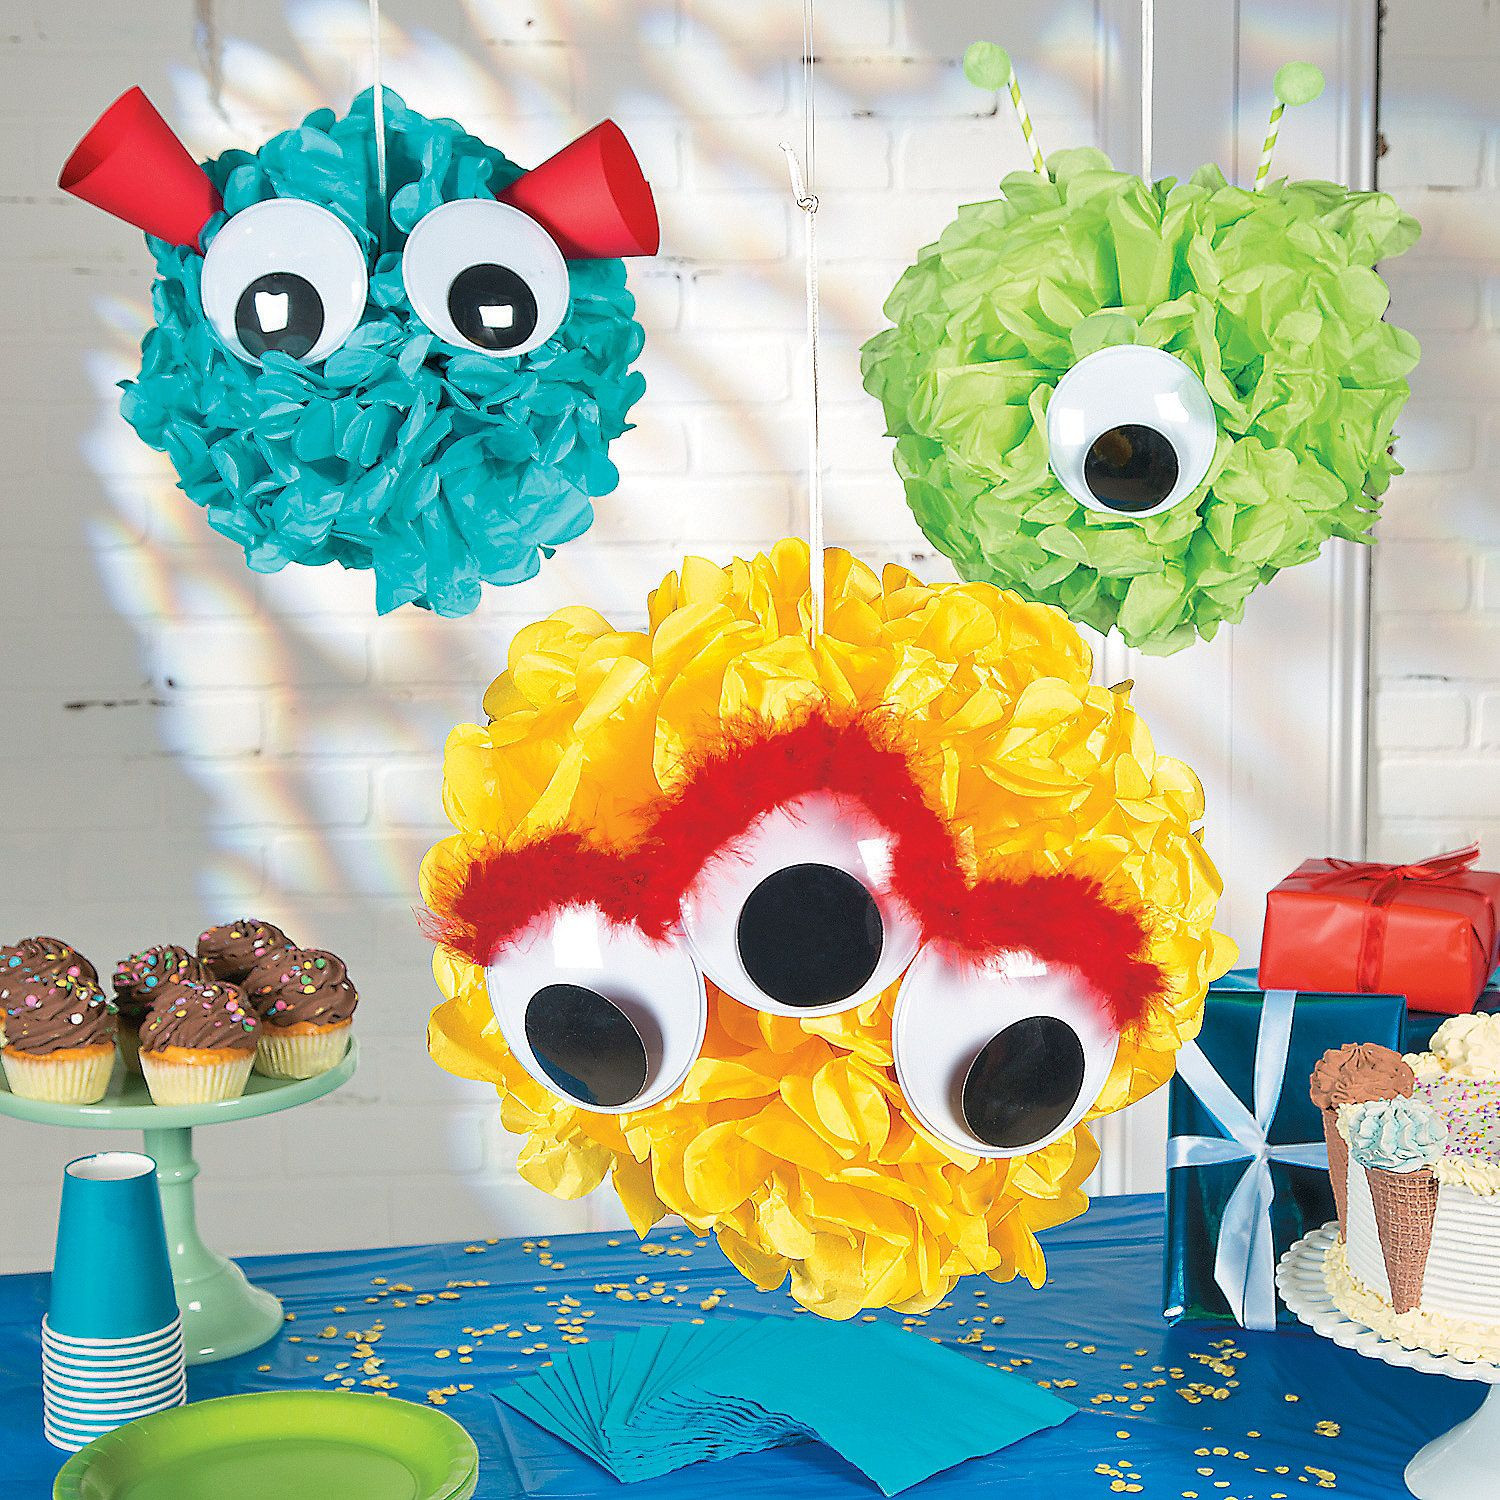 DIY Monster Party Decorations
 Monster Pom Pom Decor Idea